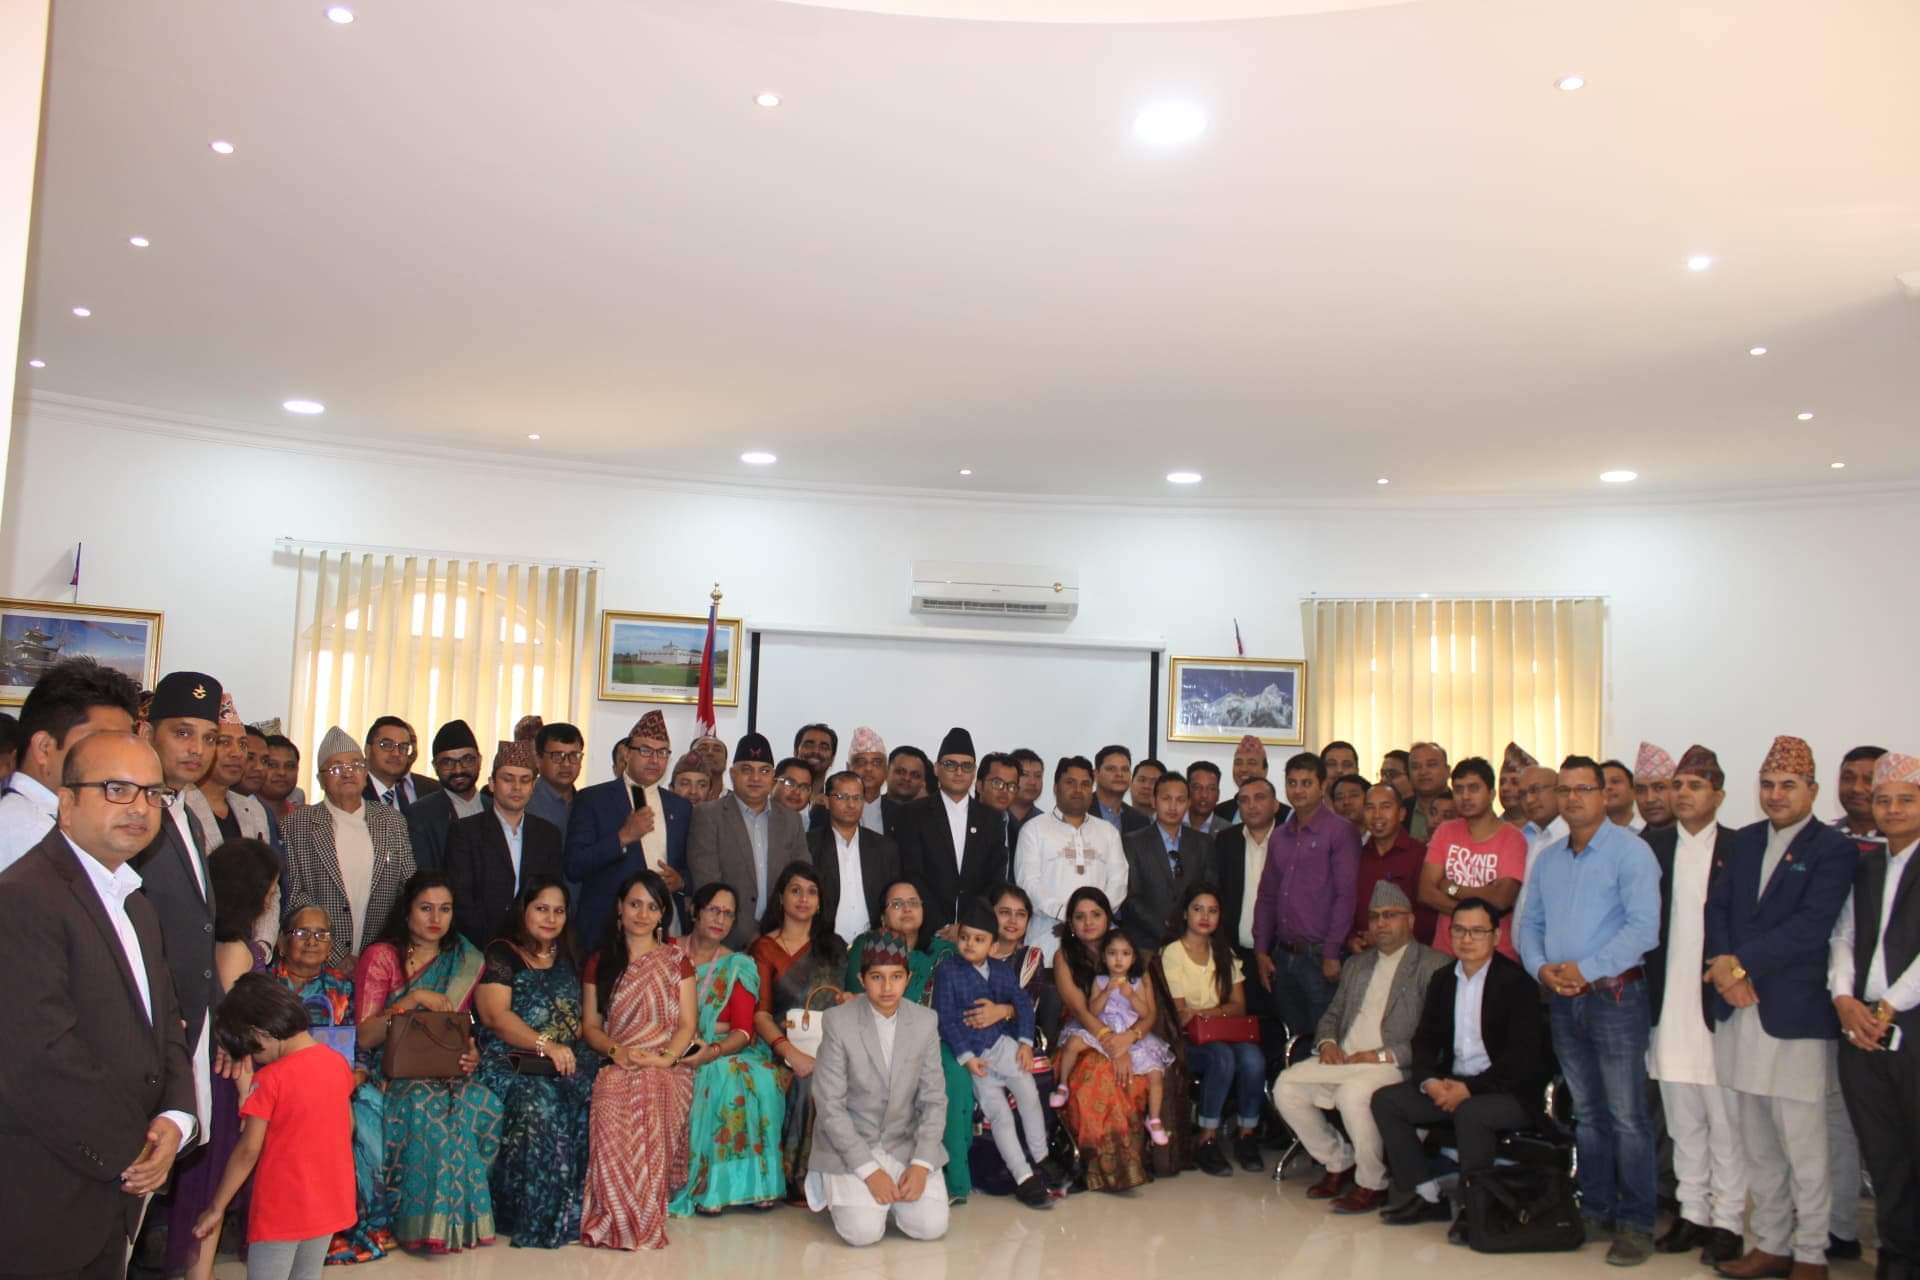 कतारमा नेपाली समुदायले मनाए संविधान दिवस